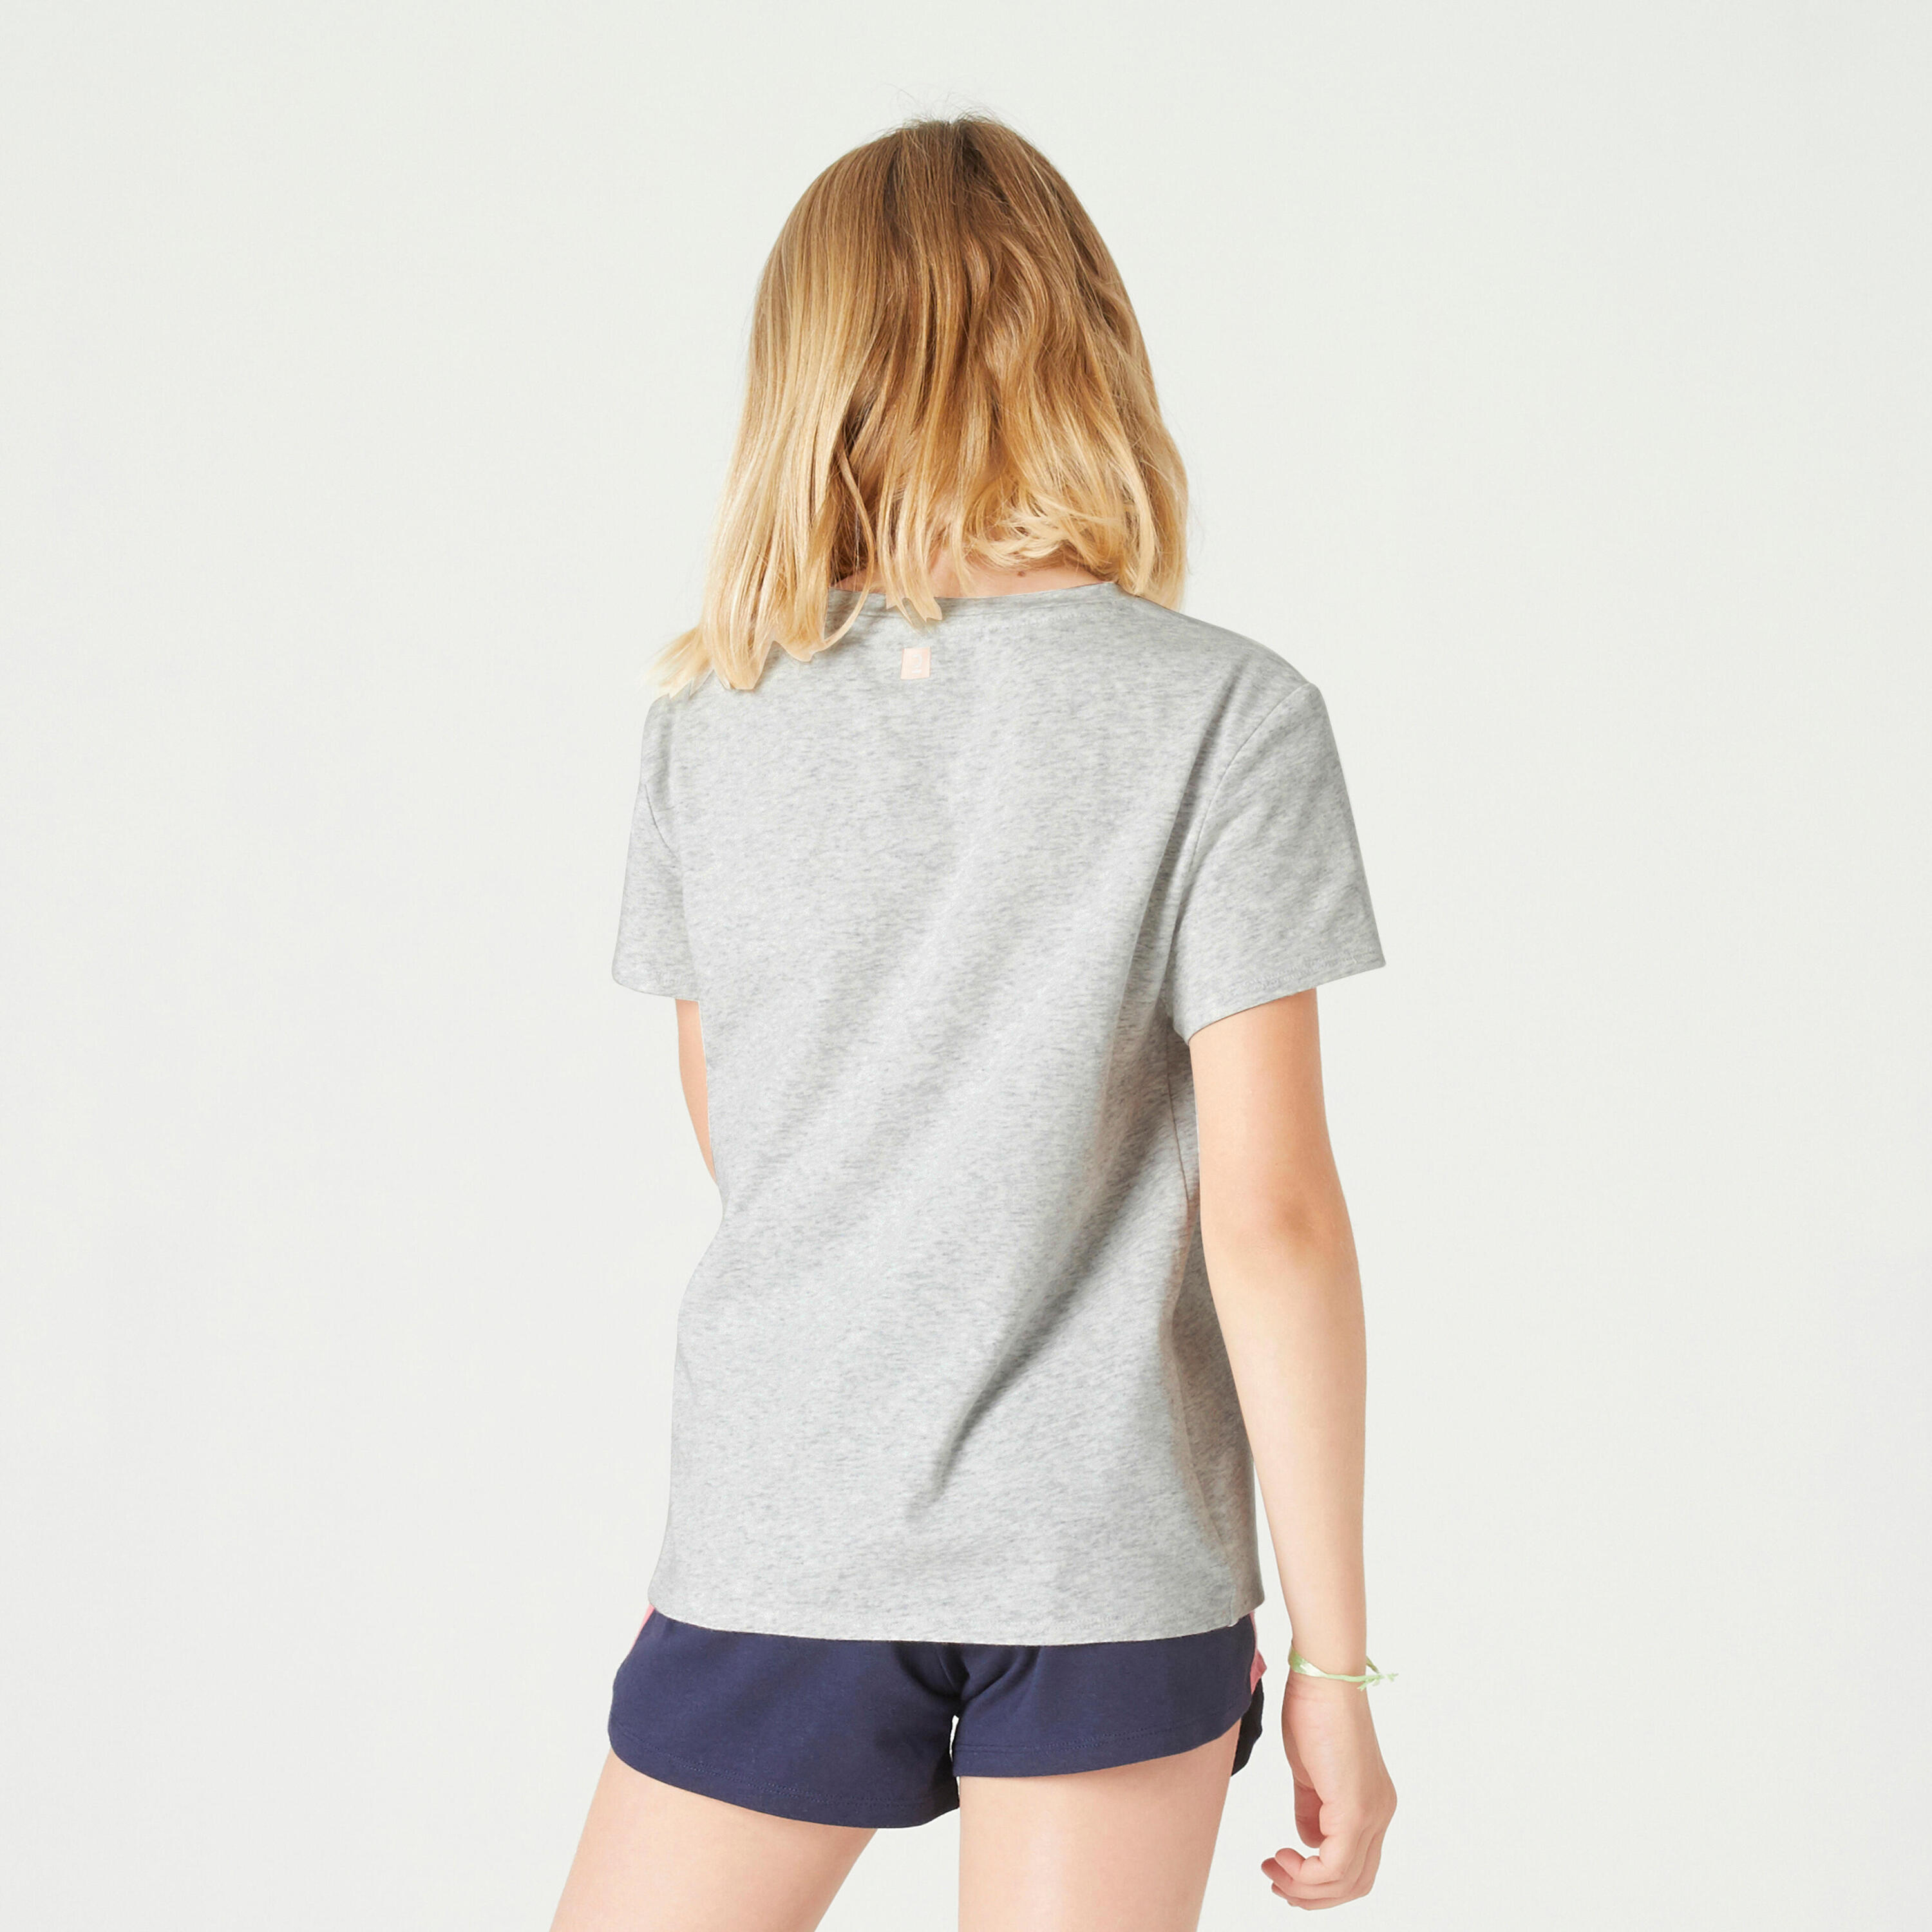 Girls' Cotton T-Shirt 500 - Grey 4/7